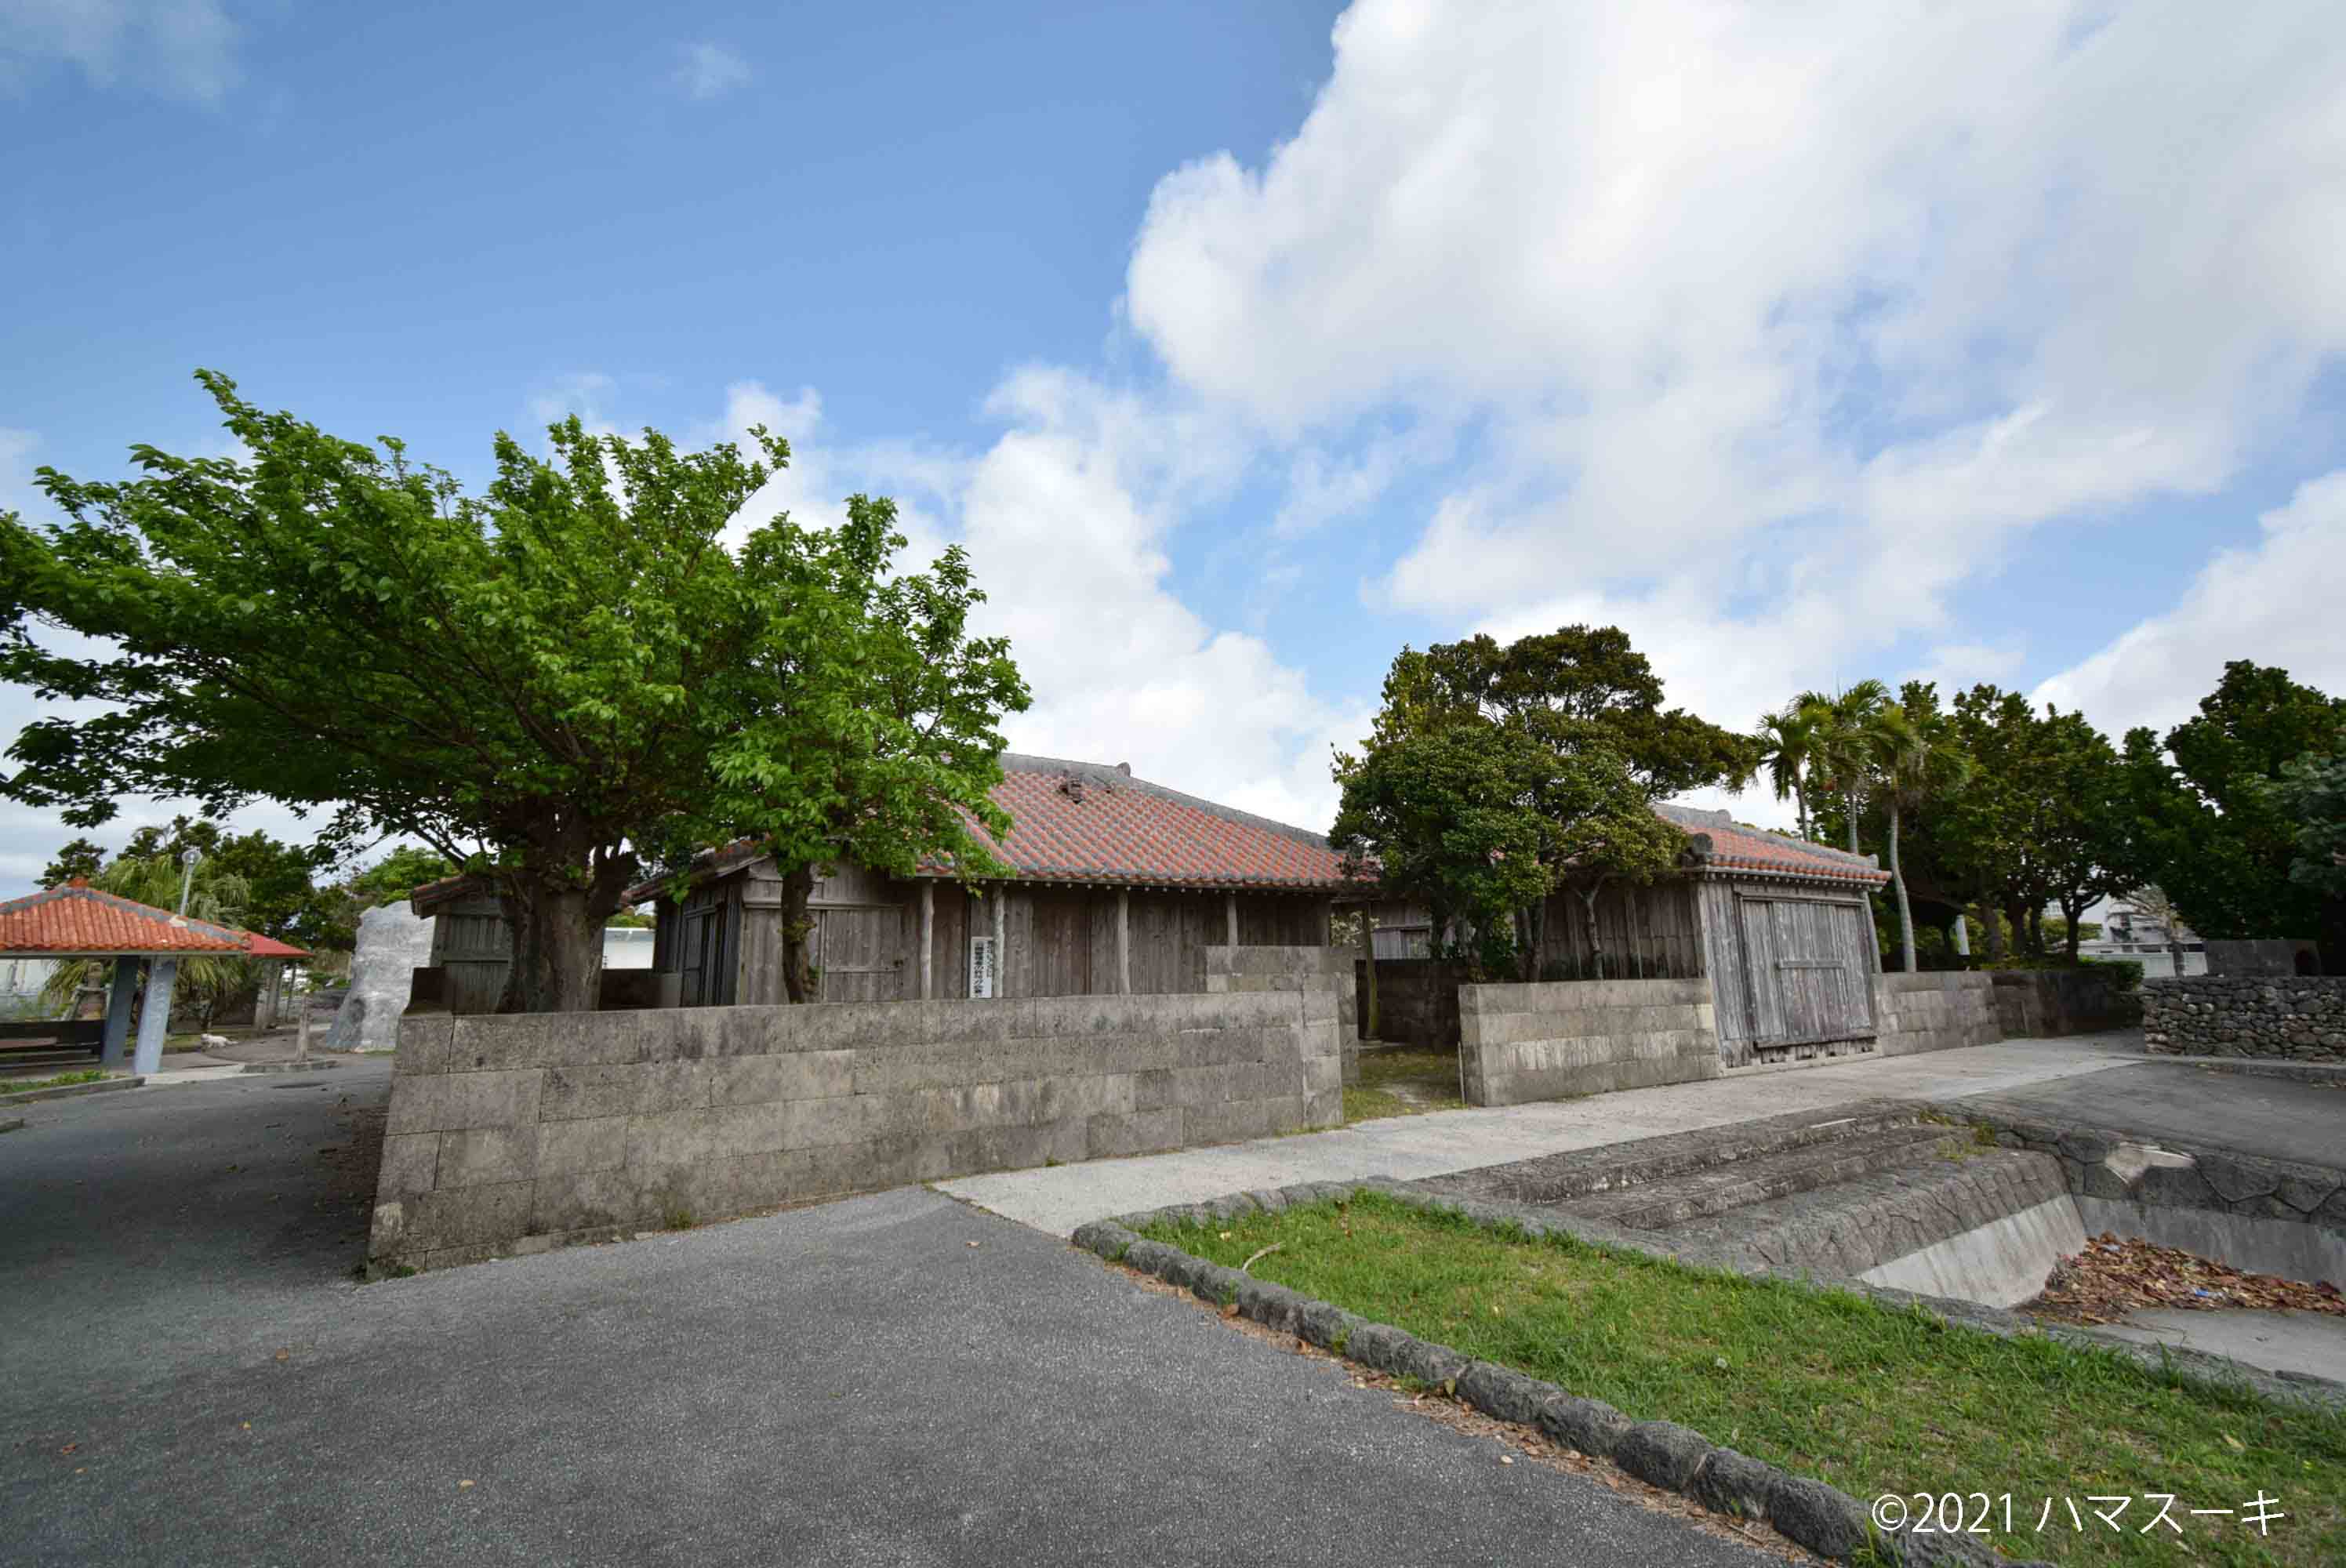 Traditional Old Houses Area at Itoman Uminchu Kobo